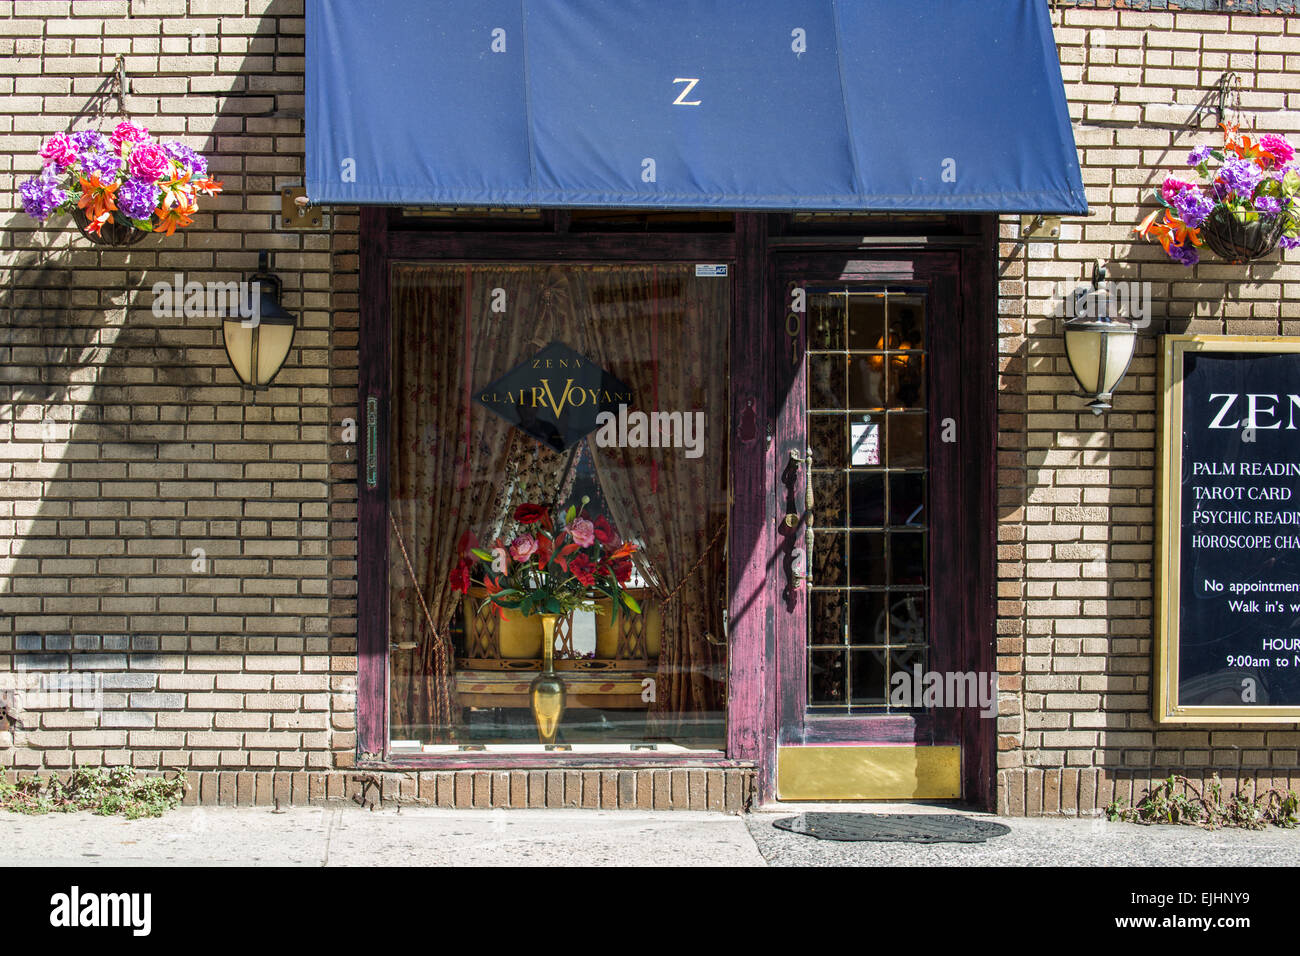 Zena boutique palm reader à Greenwich Village, New York City, USA Banque D'Images